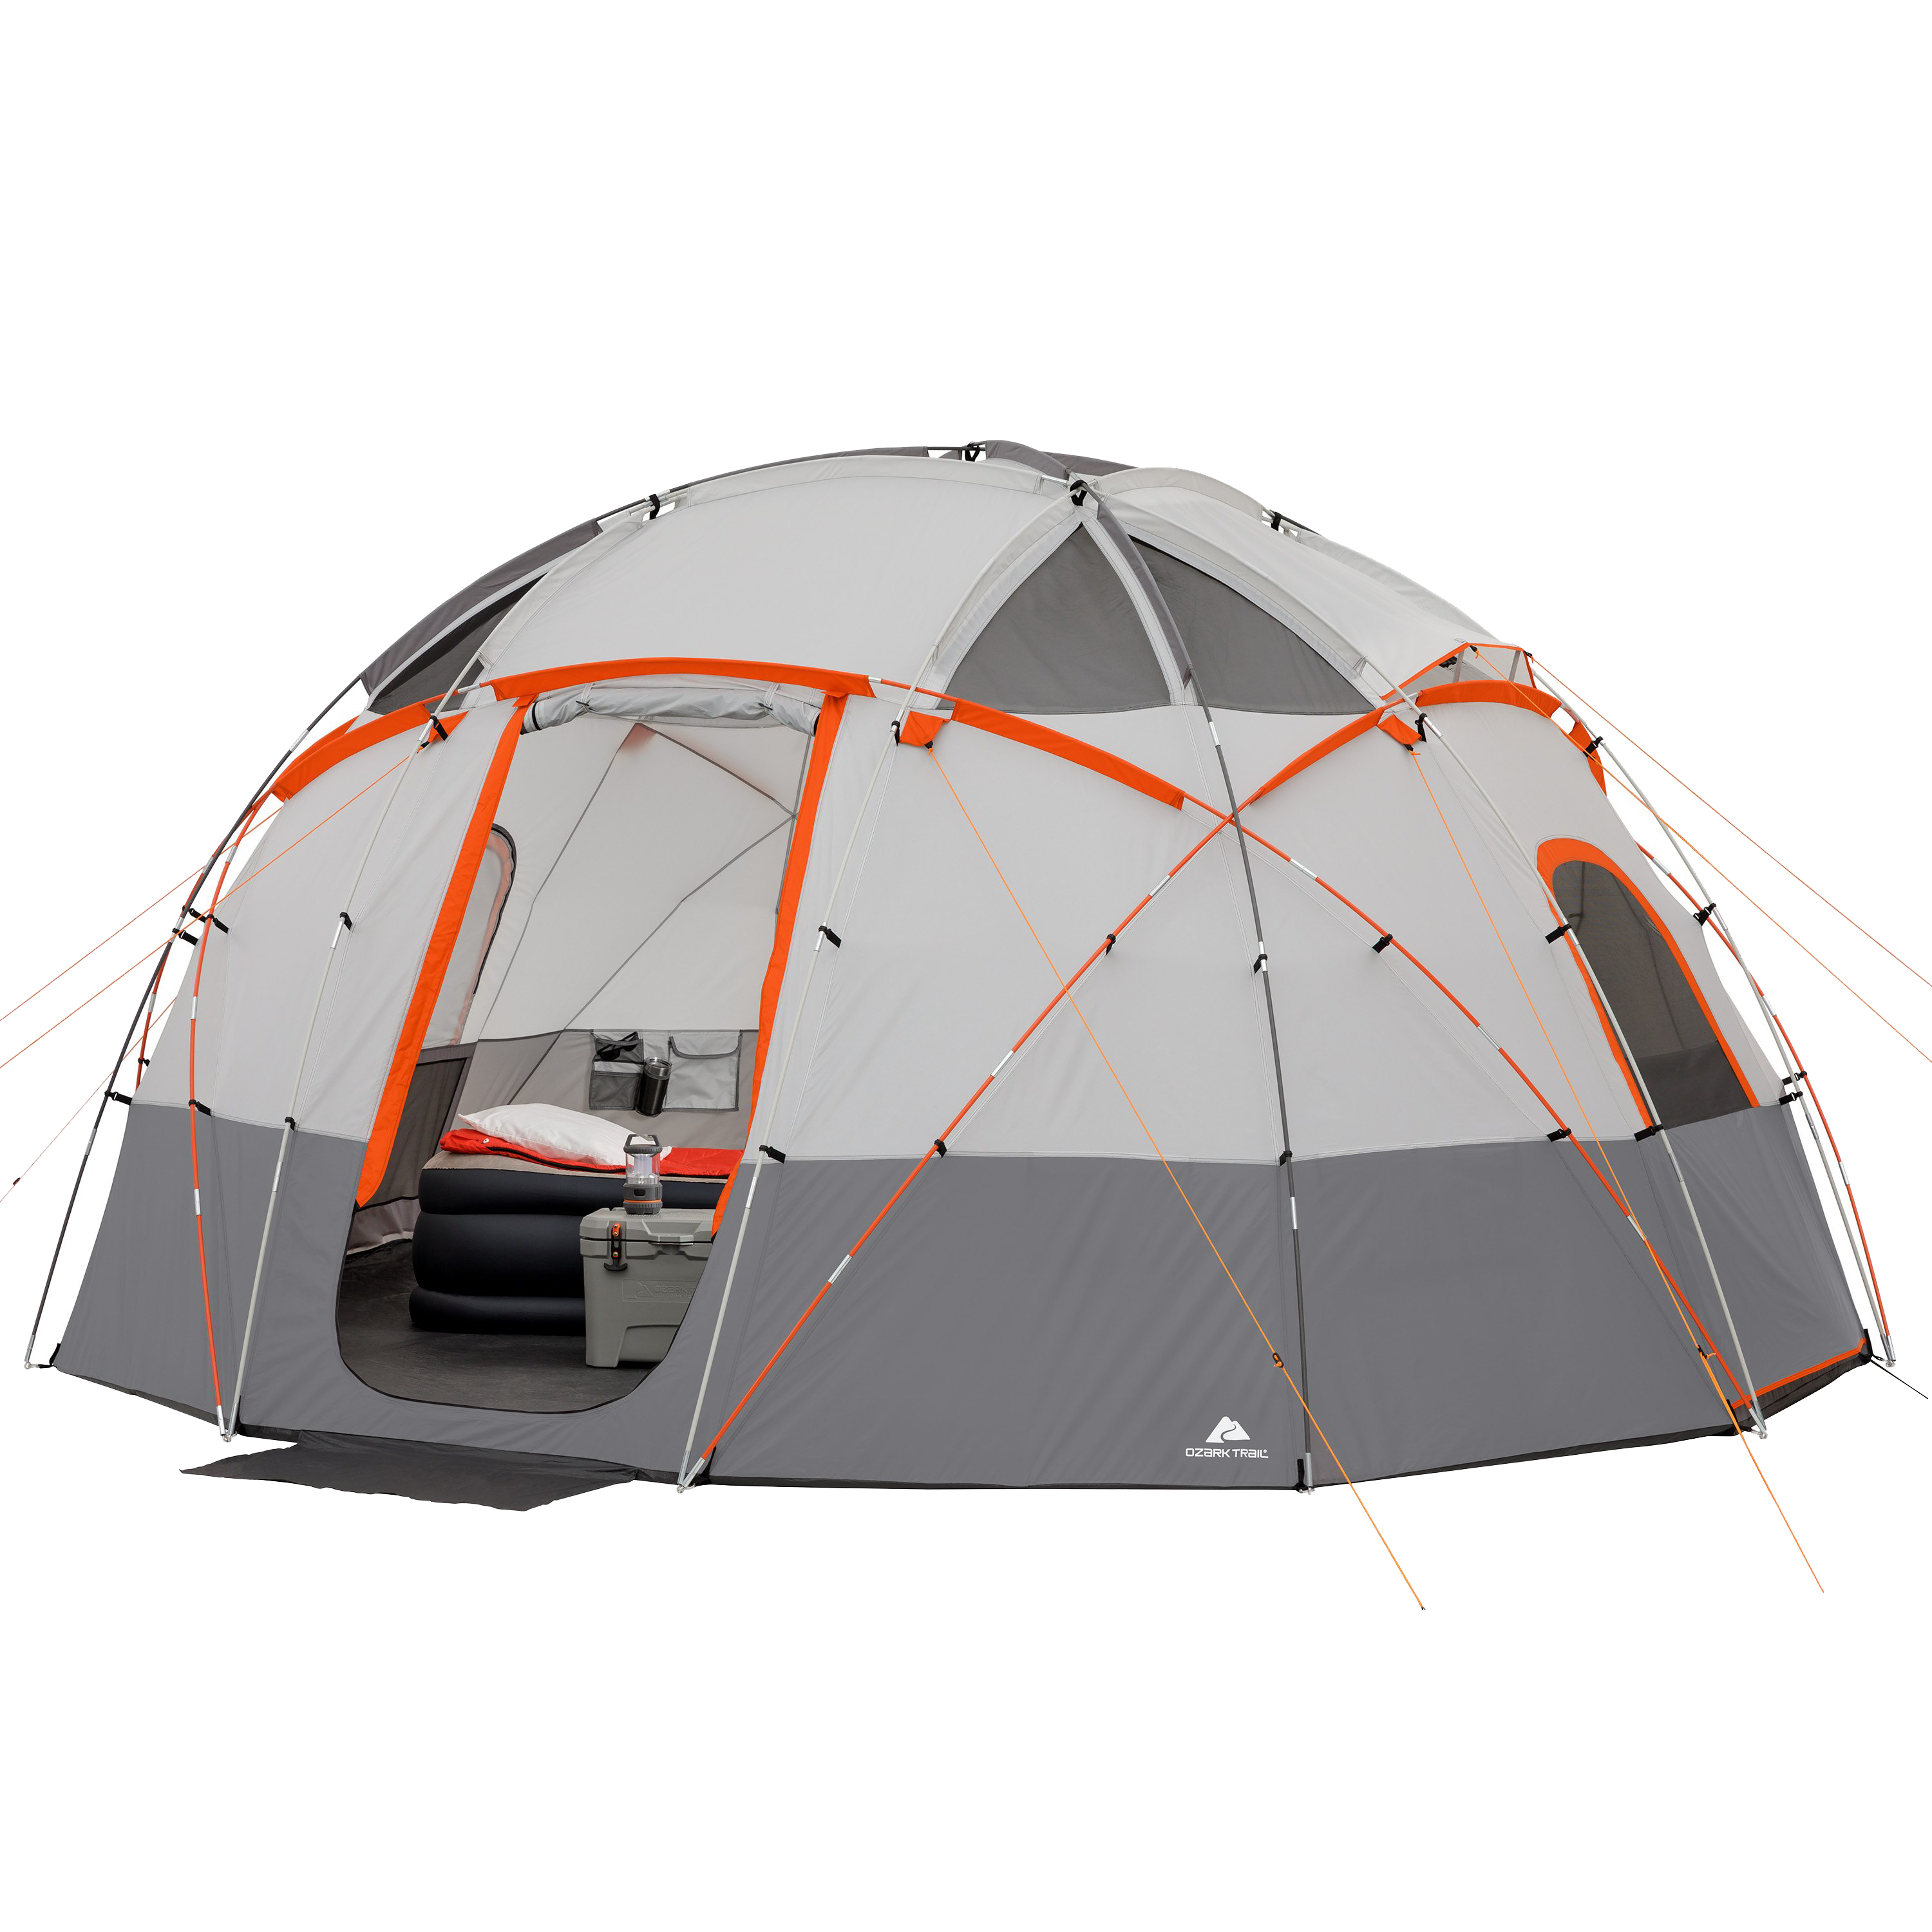 Camp Tent PNG Image Transparent Background